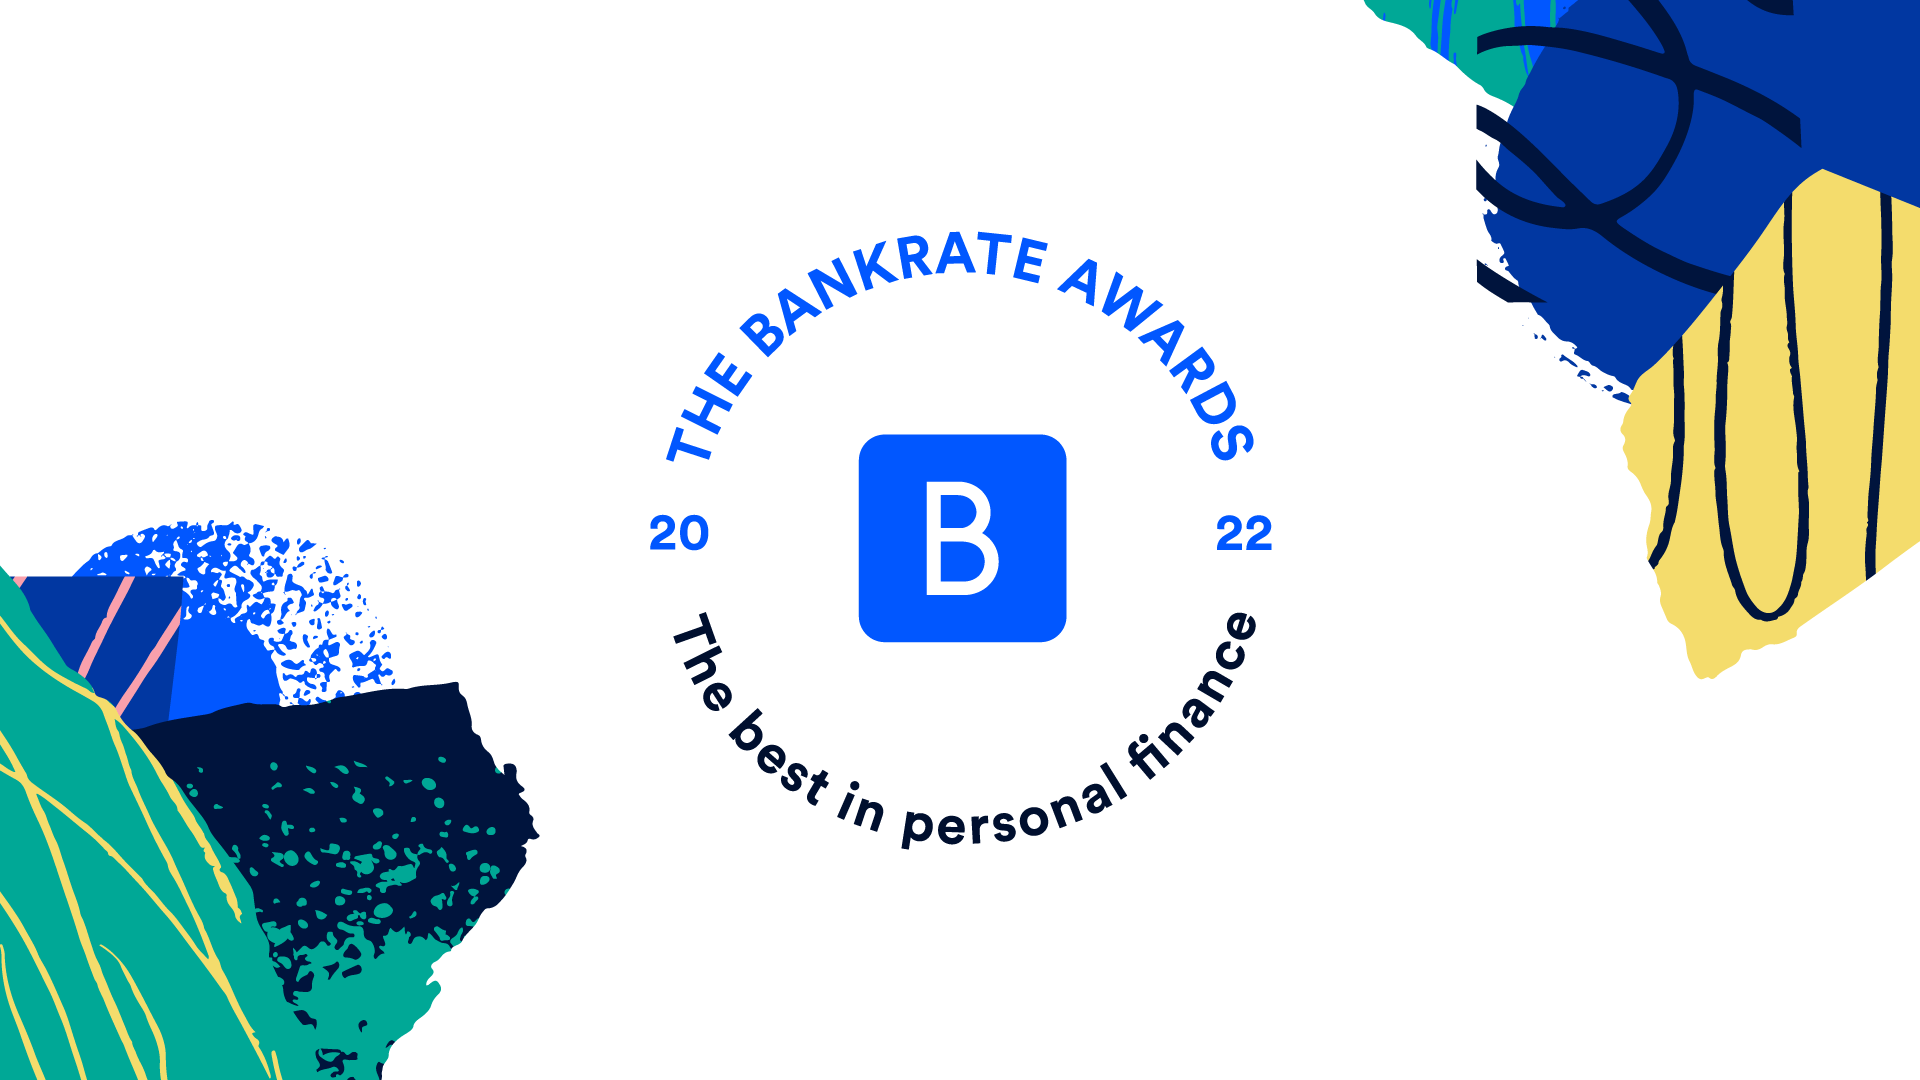 Bankrate Awards video - thumbnail wide